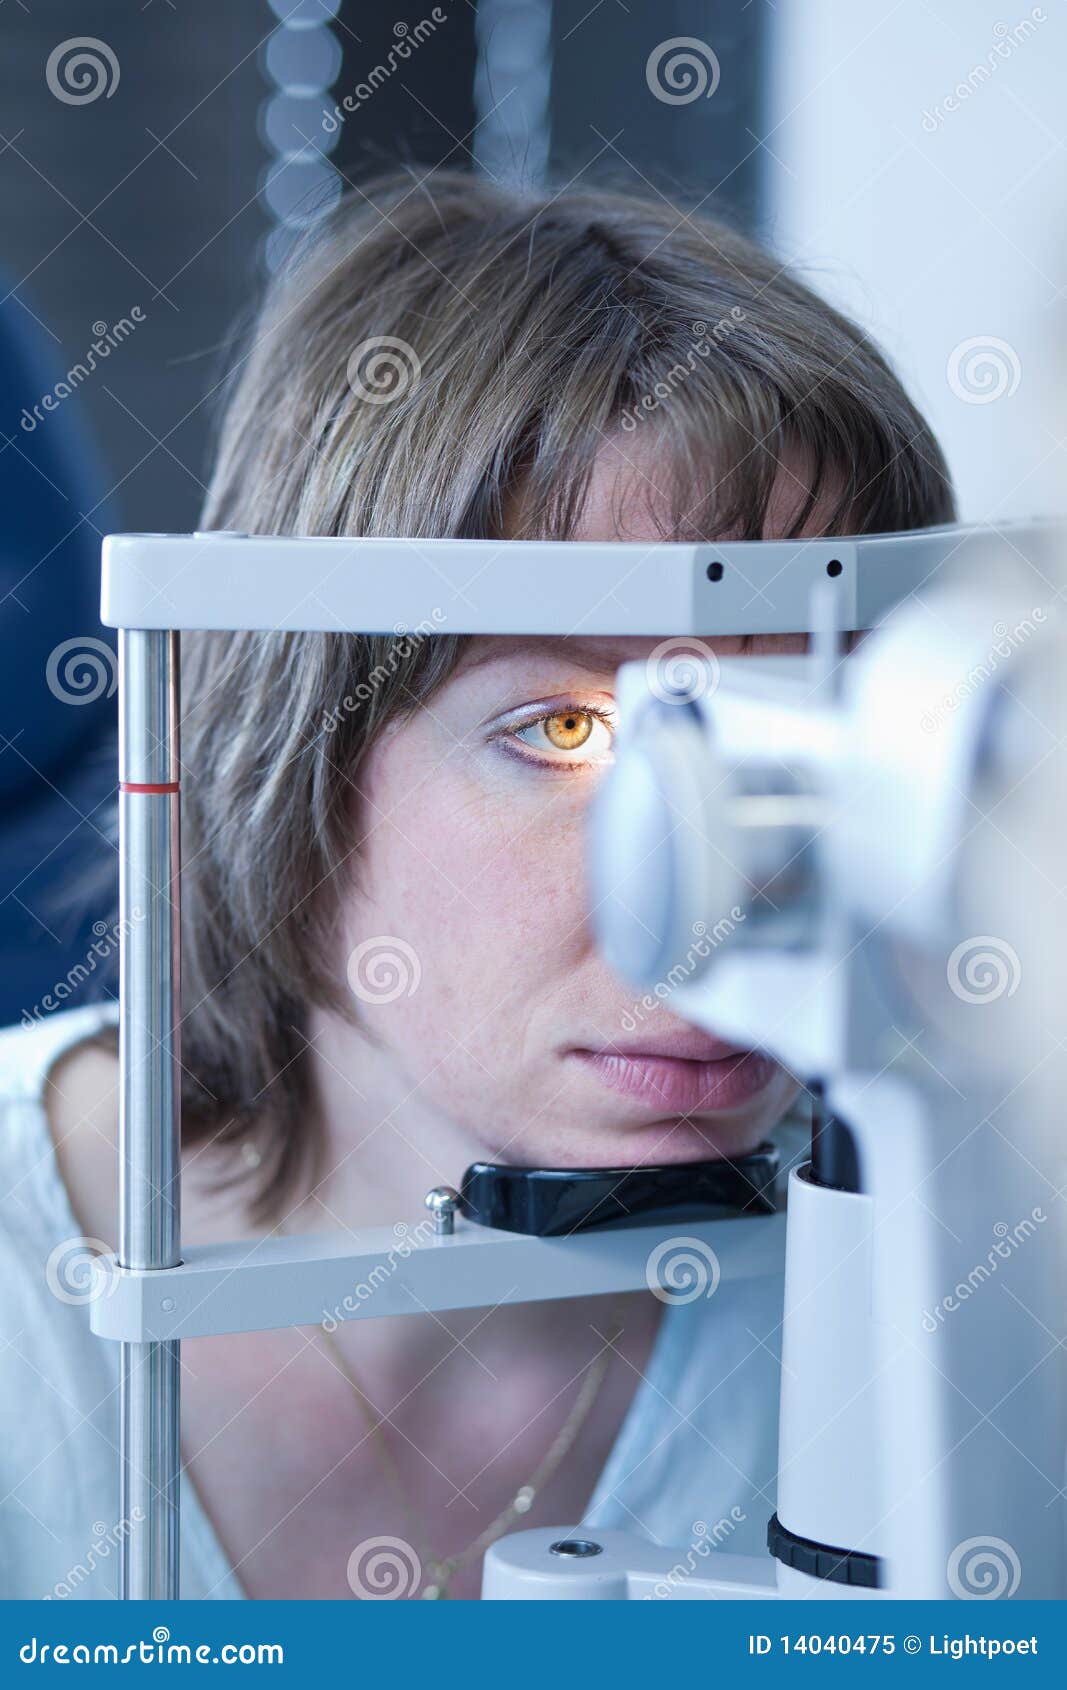 optometry concept